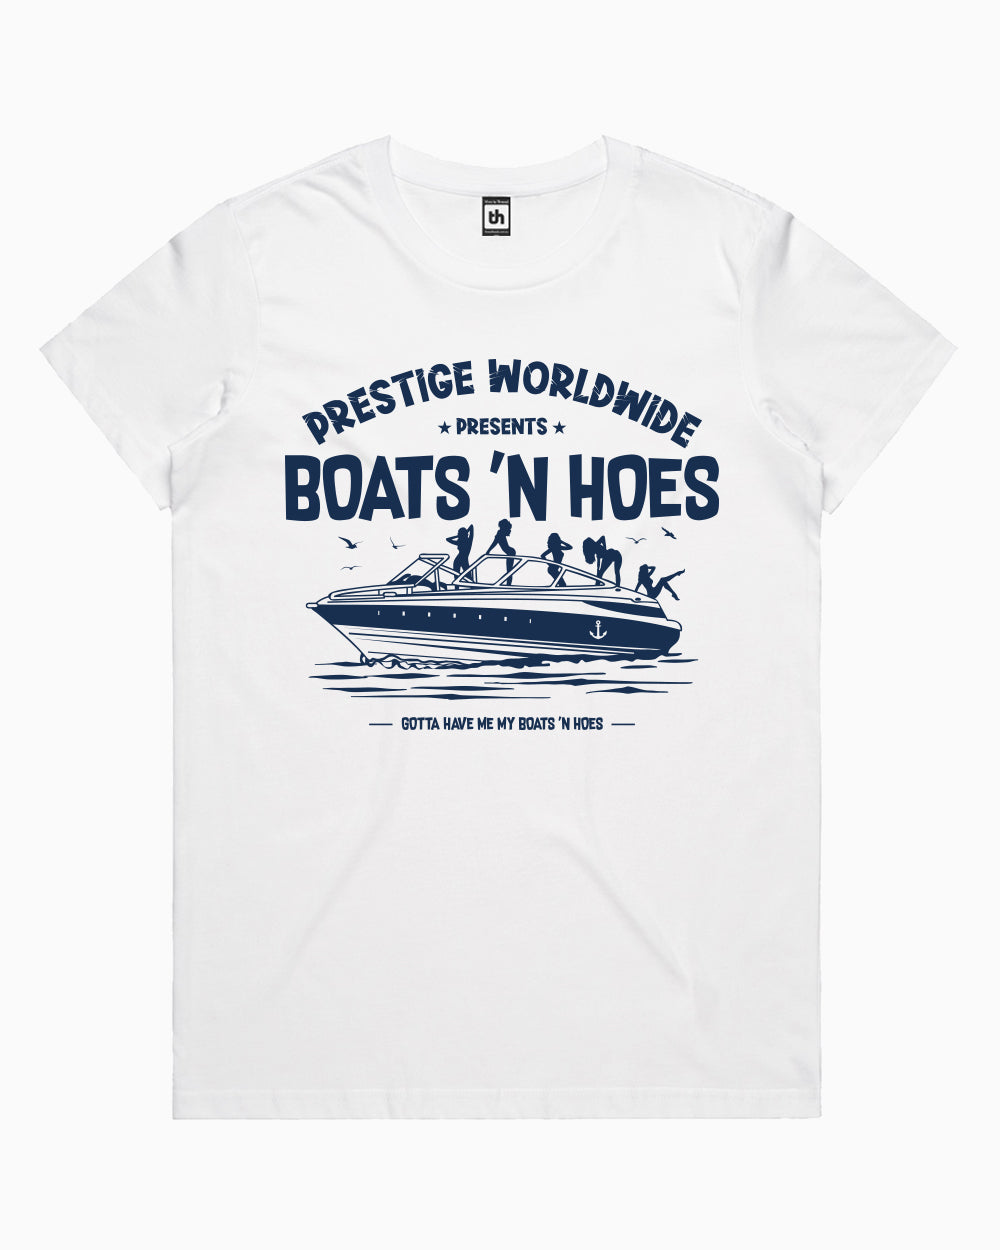 Boats N Hoes T-Shirt, Movie Graphic T-Shirt Australia